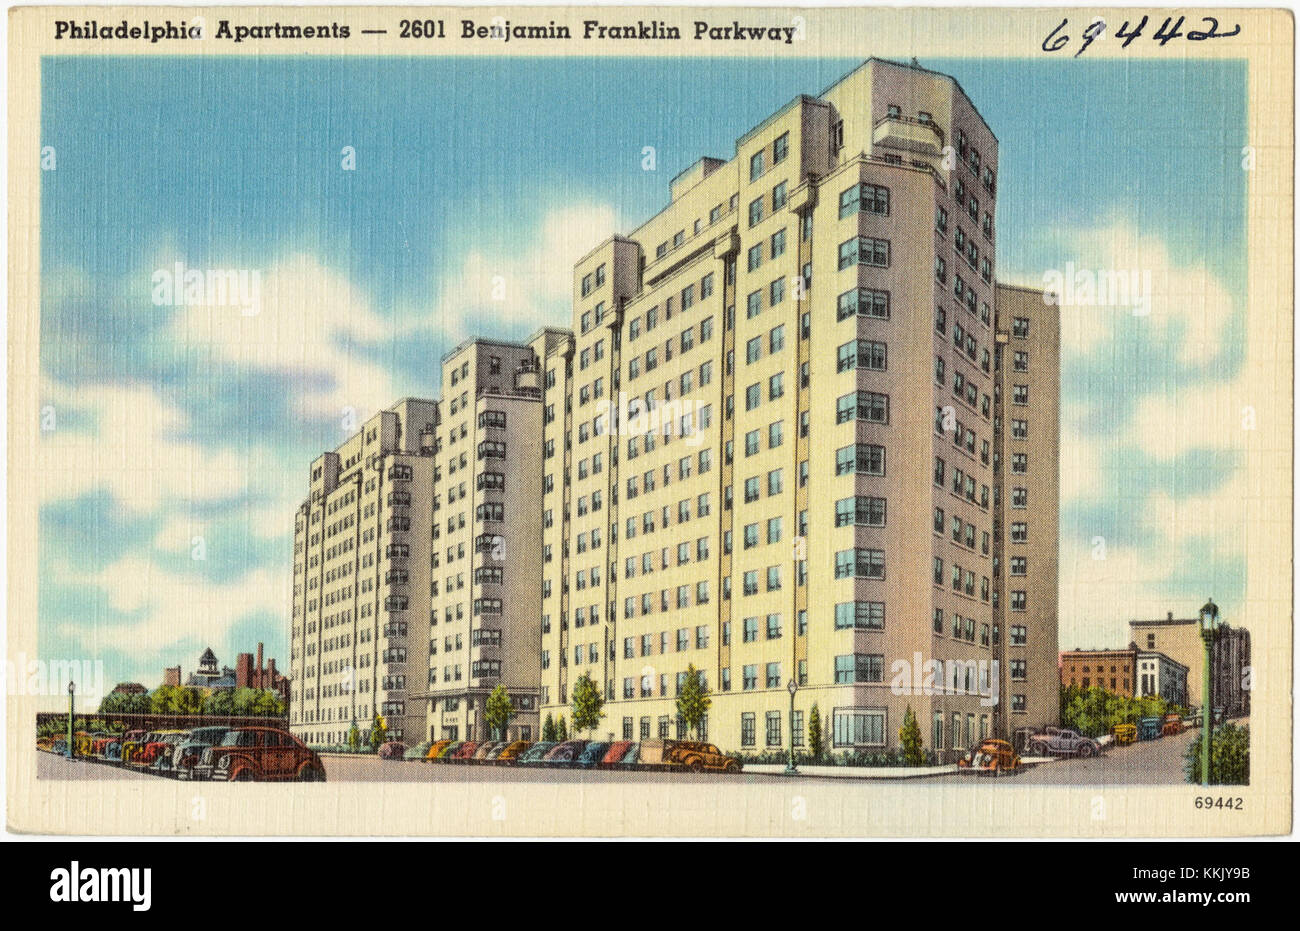 Philadelphia Apartments - 2601 Benjamin Franklin Parkway (69442) Stock Photo